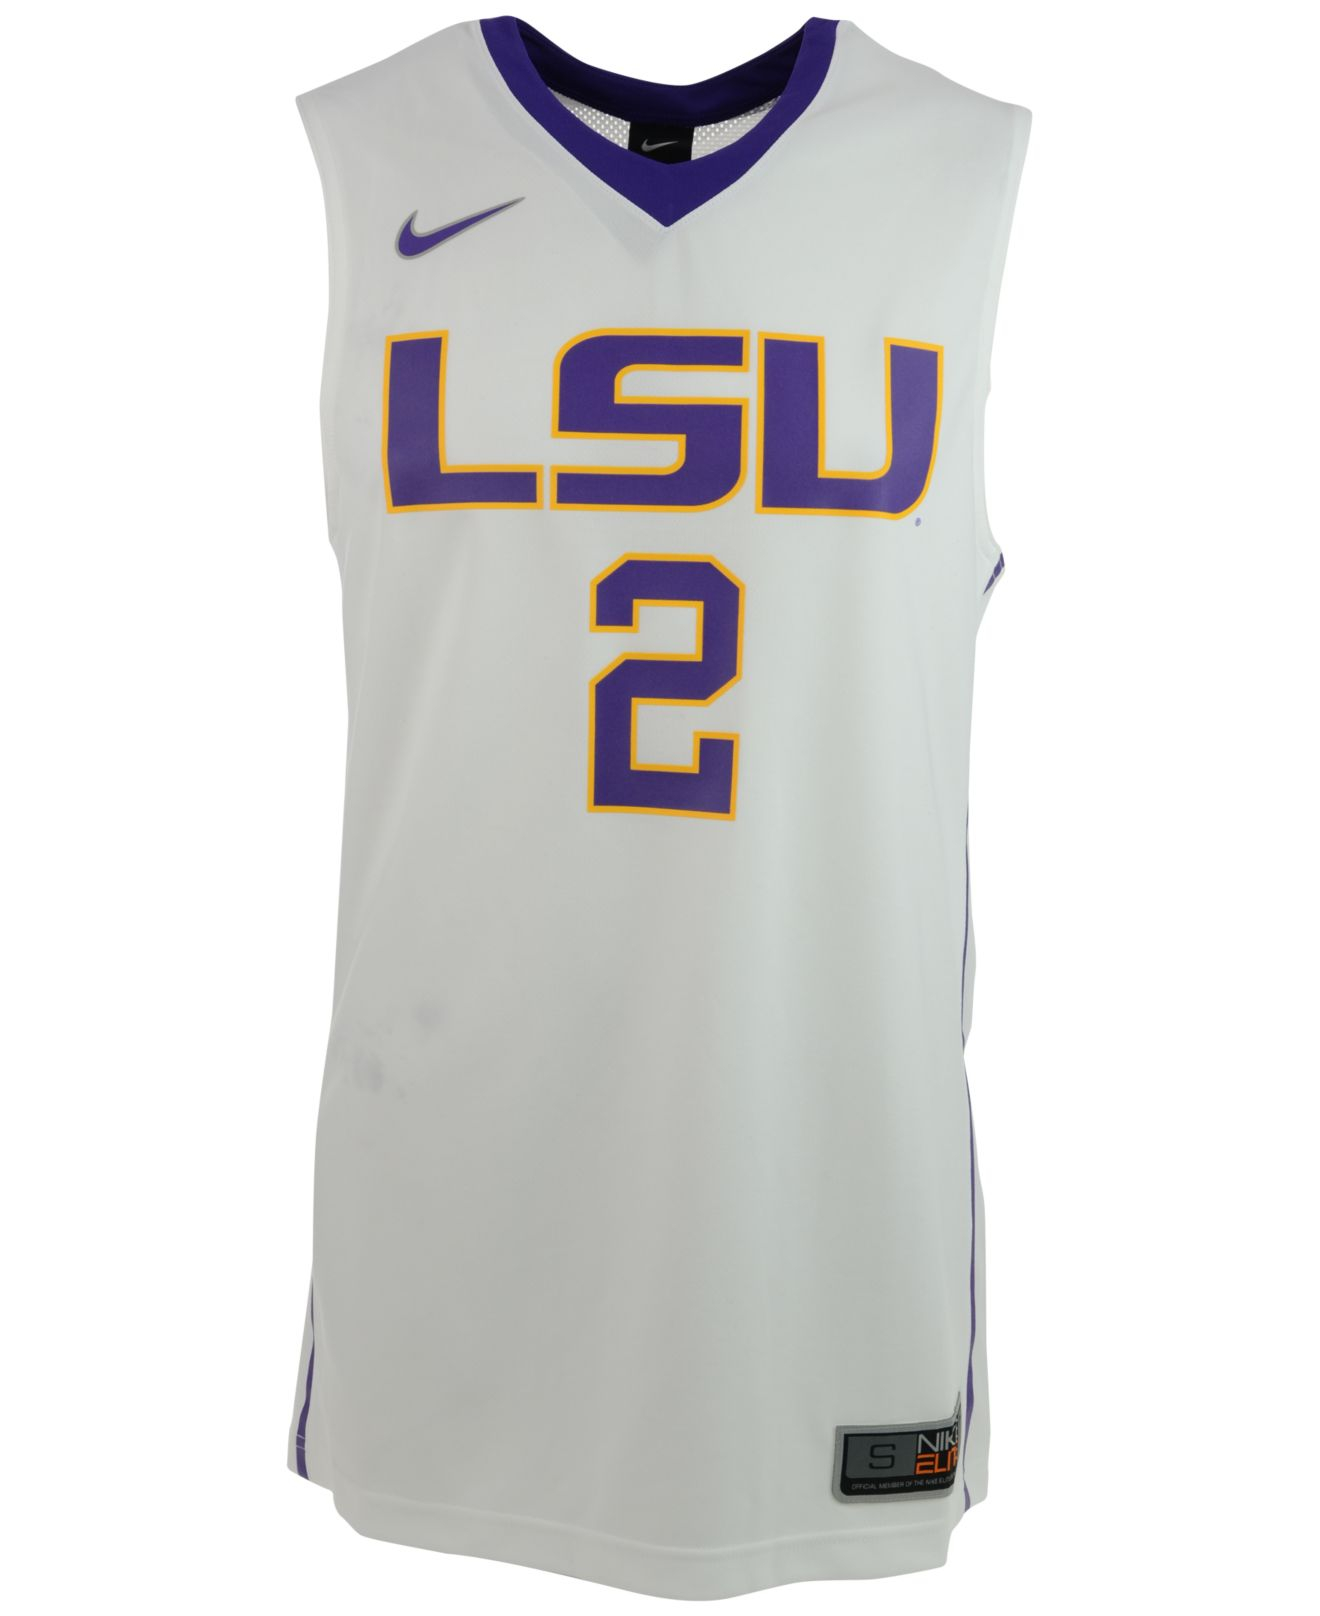 Download Nike Men's Lsu Tigers Replica Basketball Jersey in White ...